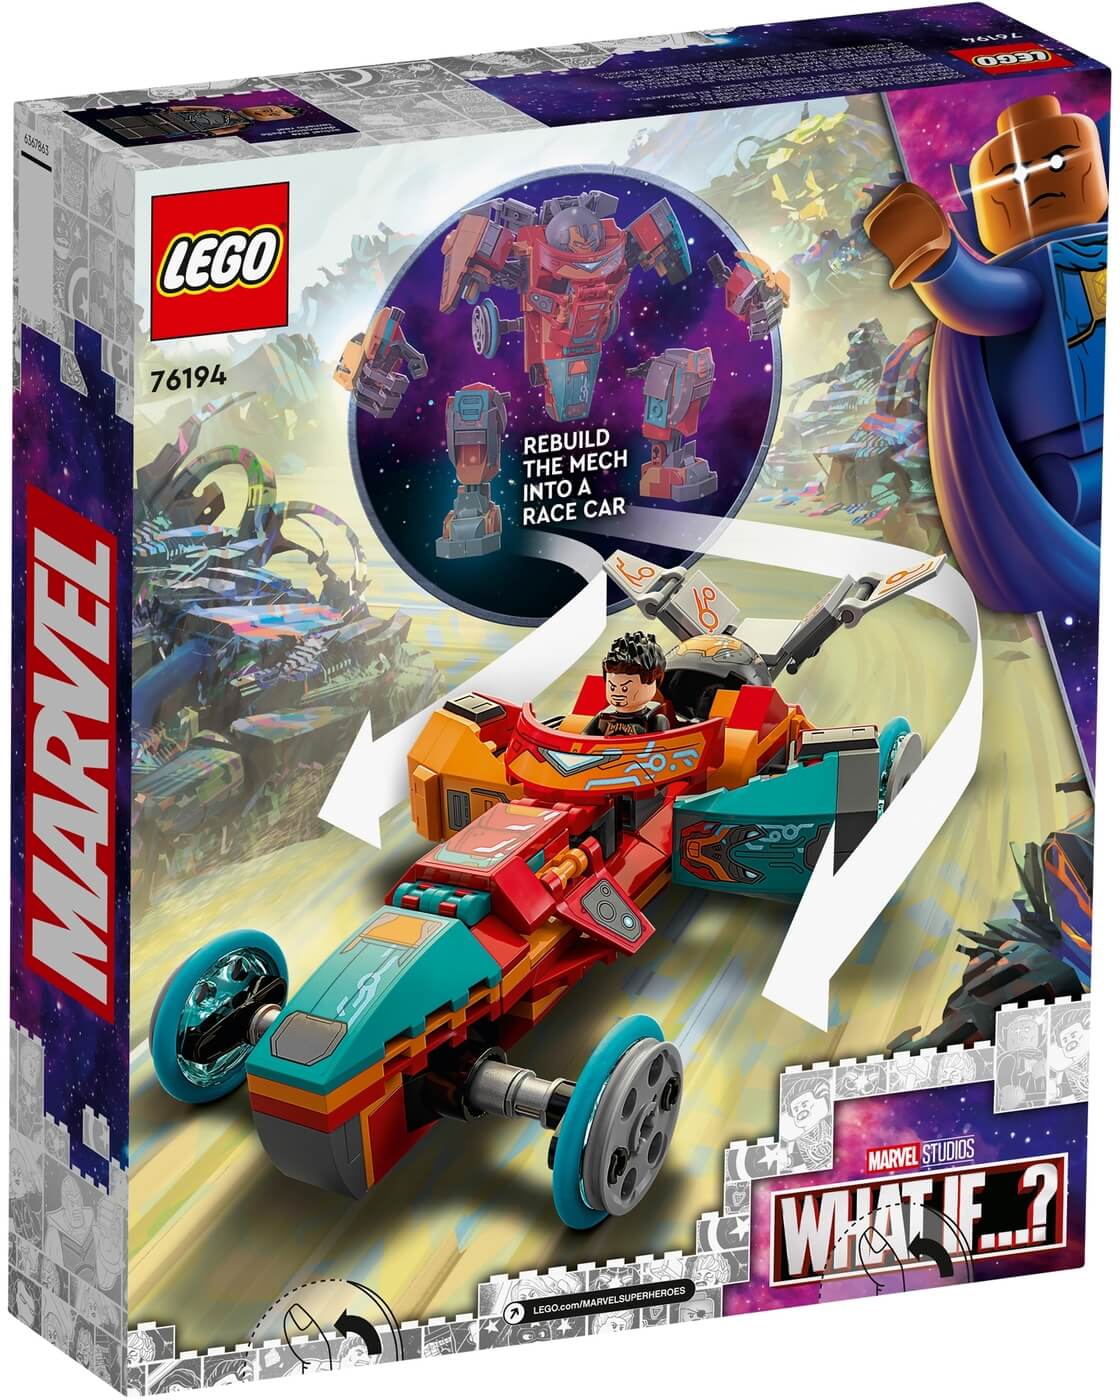 Iron Man Sakaariano de Tony Stark ( Lego 76194 ) imagen e